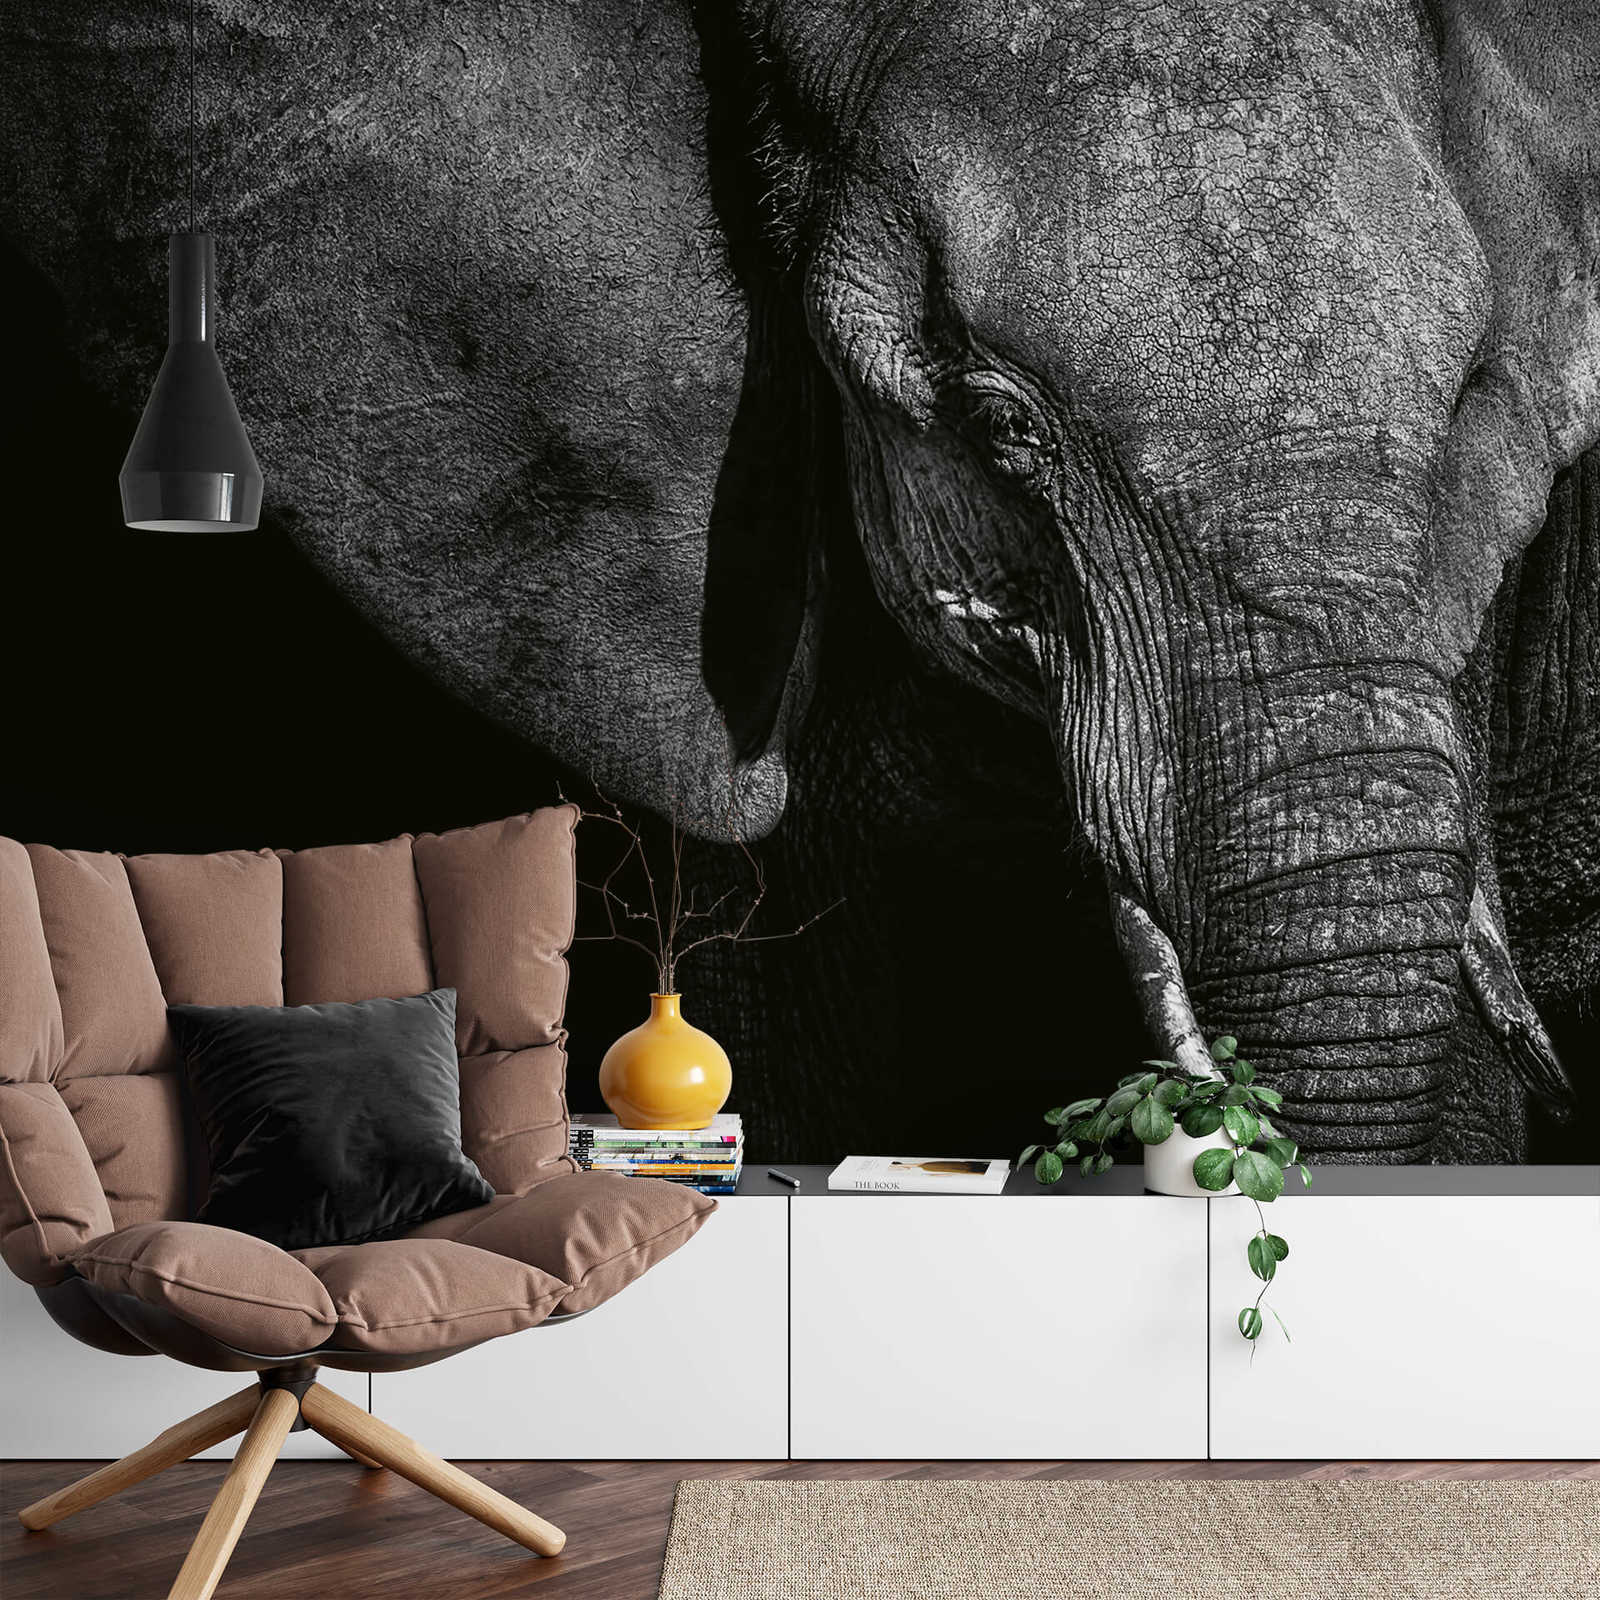             Photo wallpaper animal elephant - black, grey, white
        